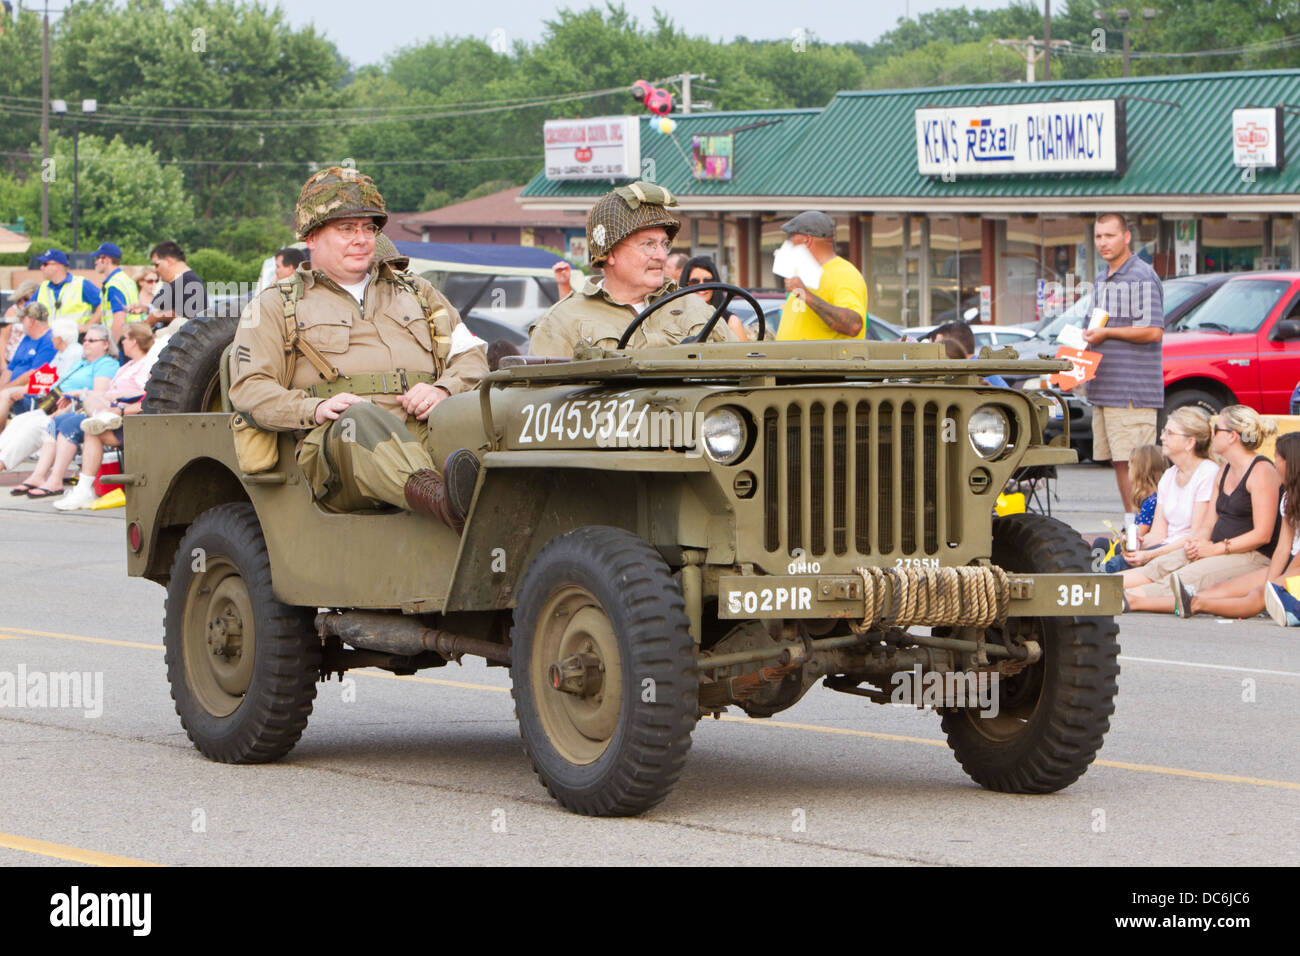 Two men dressed as WW2 GIs riding a vintage jeep. Stock Photo